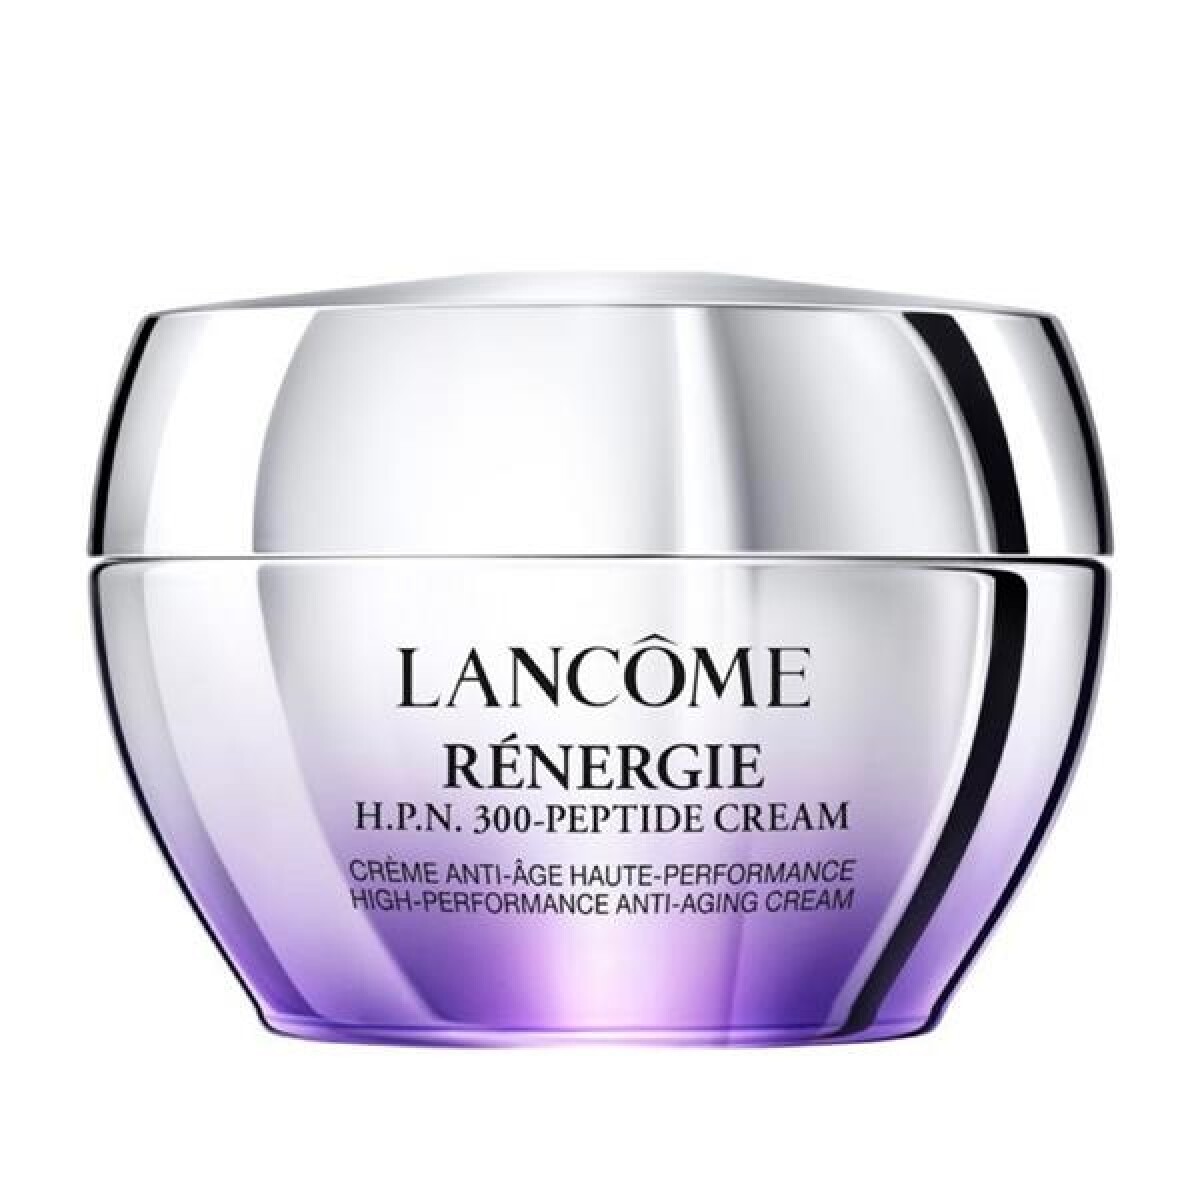 Lancome Renergie New Cream J30ml R23 